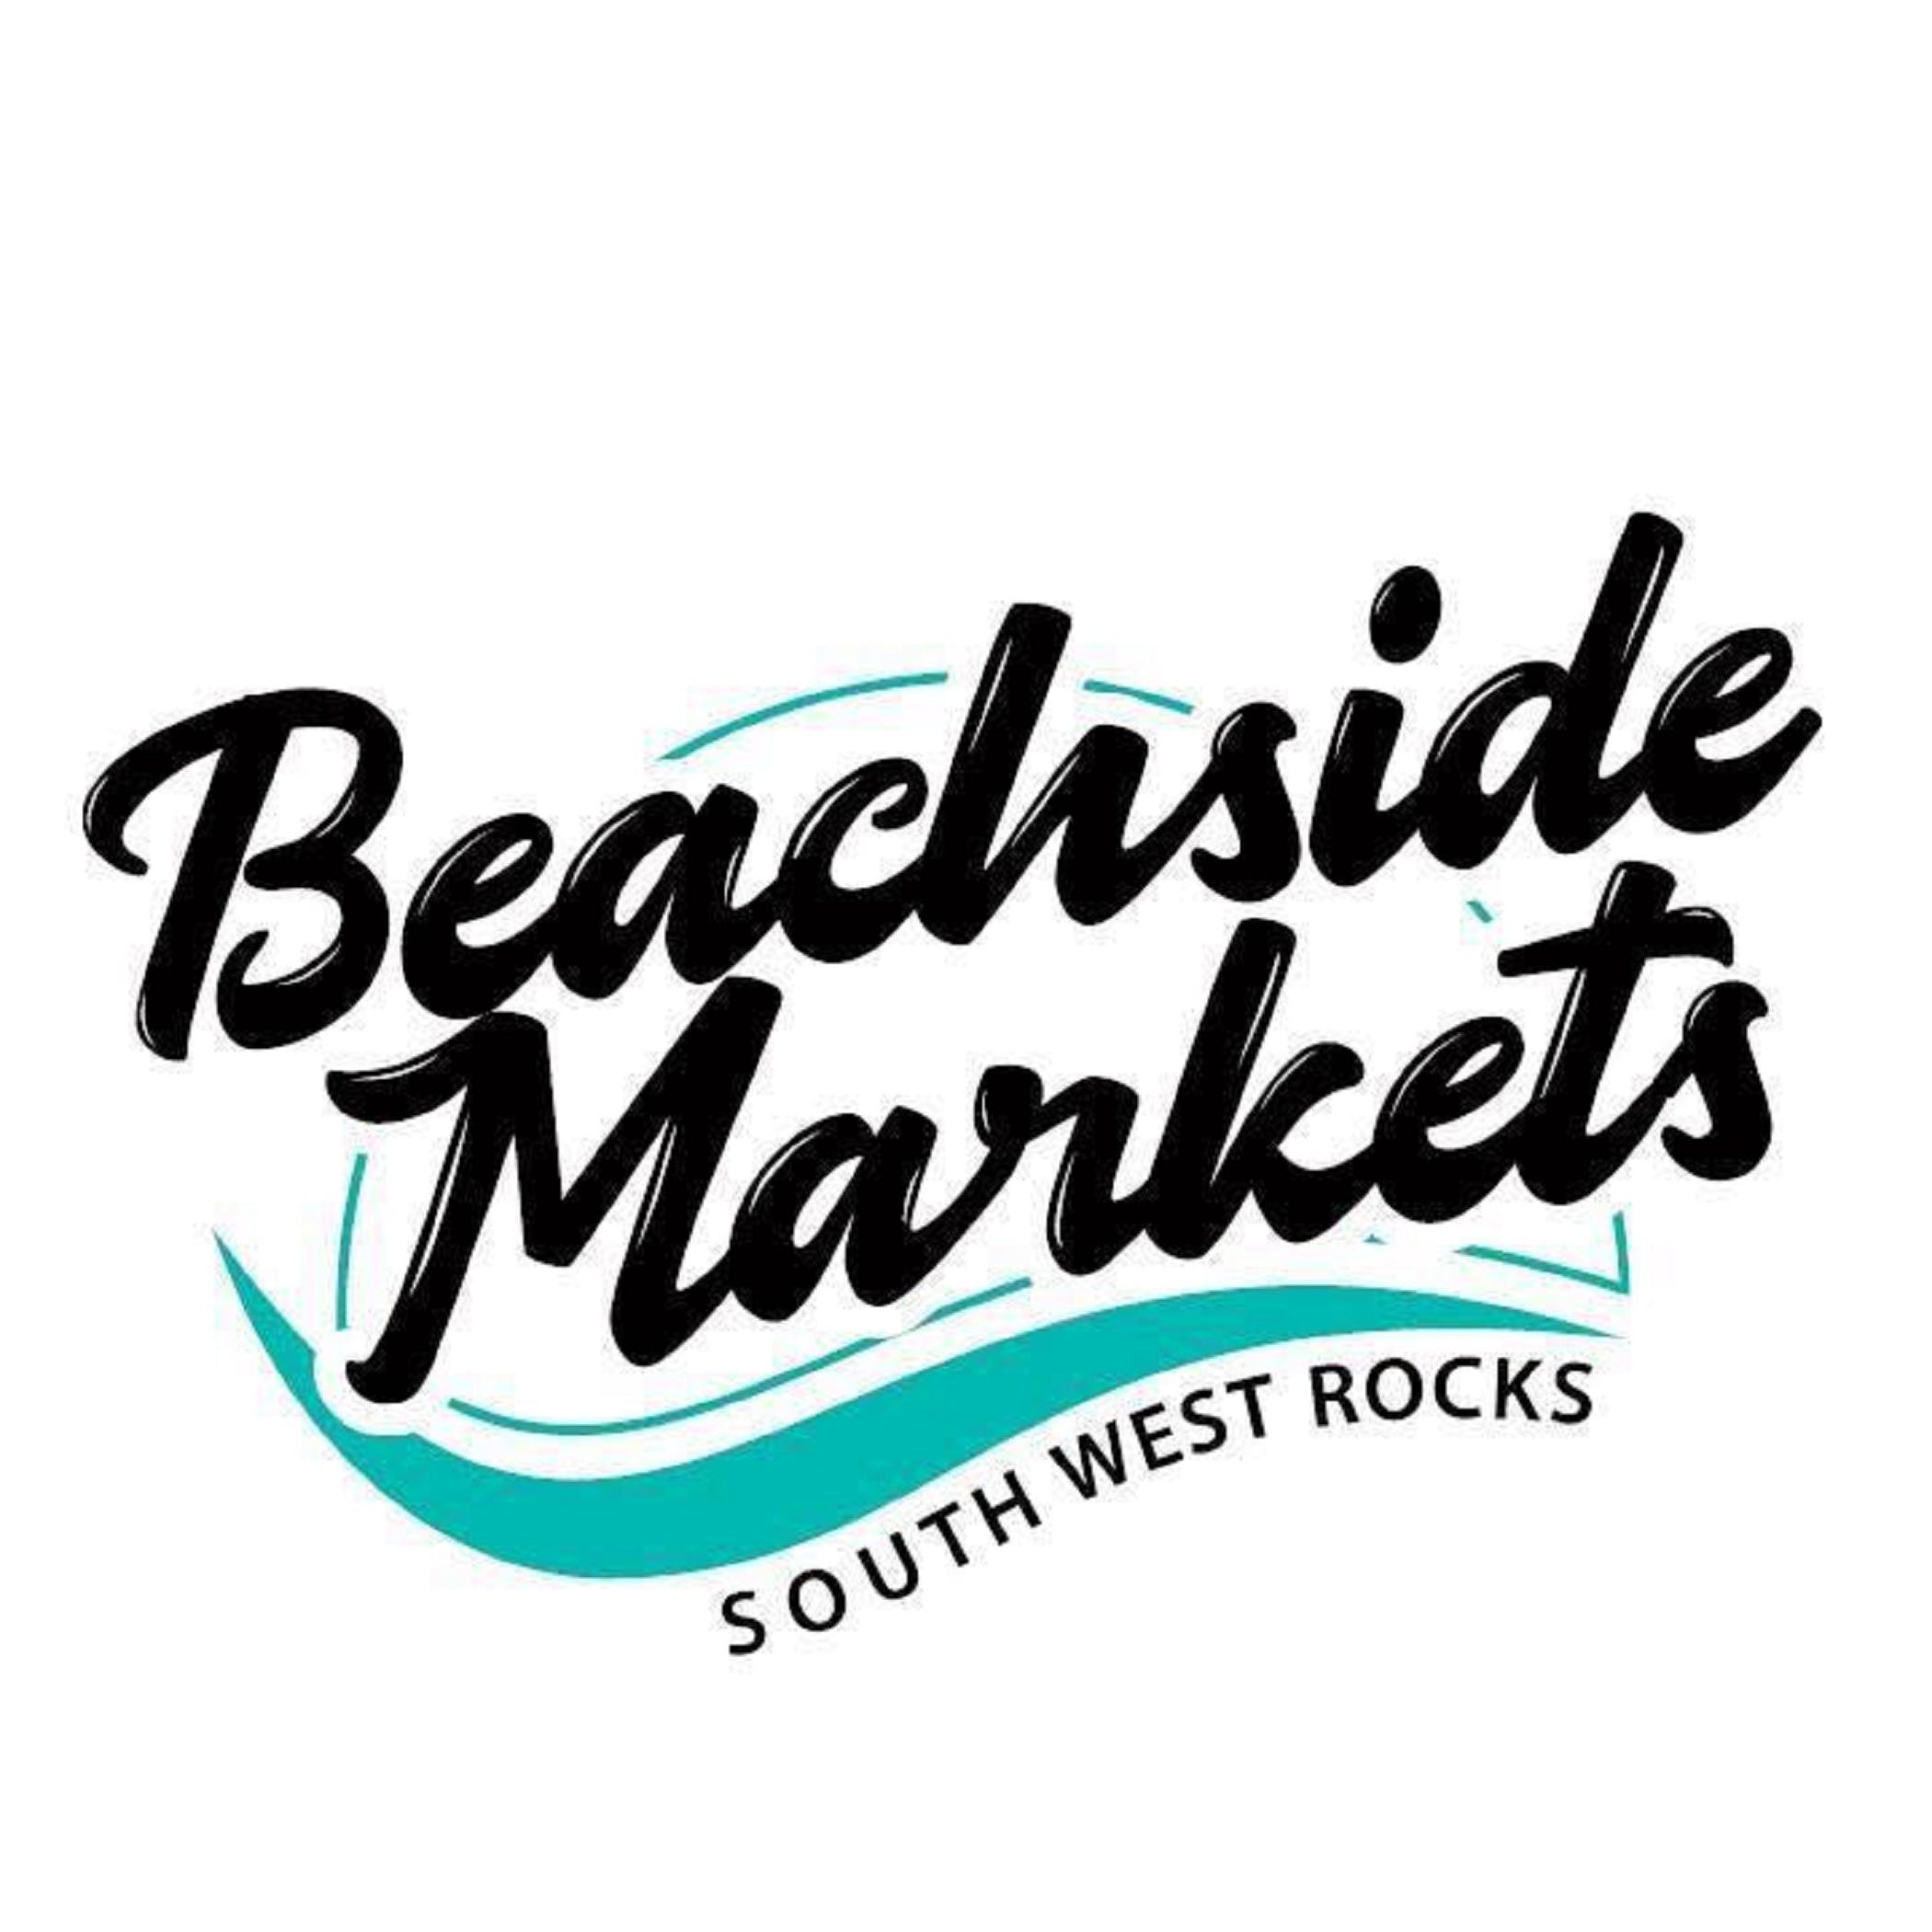 Beachside Markets South West Rocks - Casino Accommodation